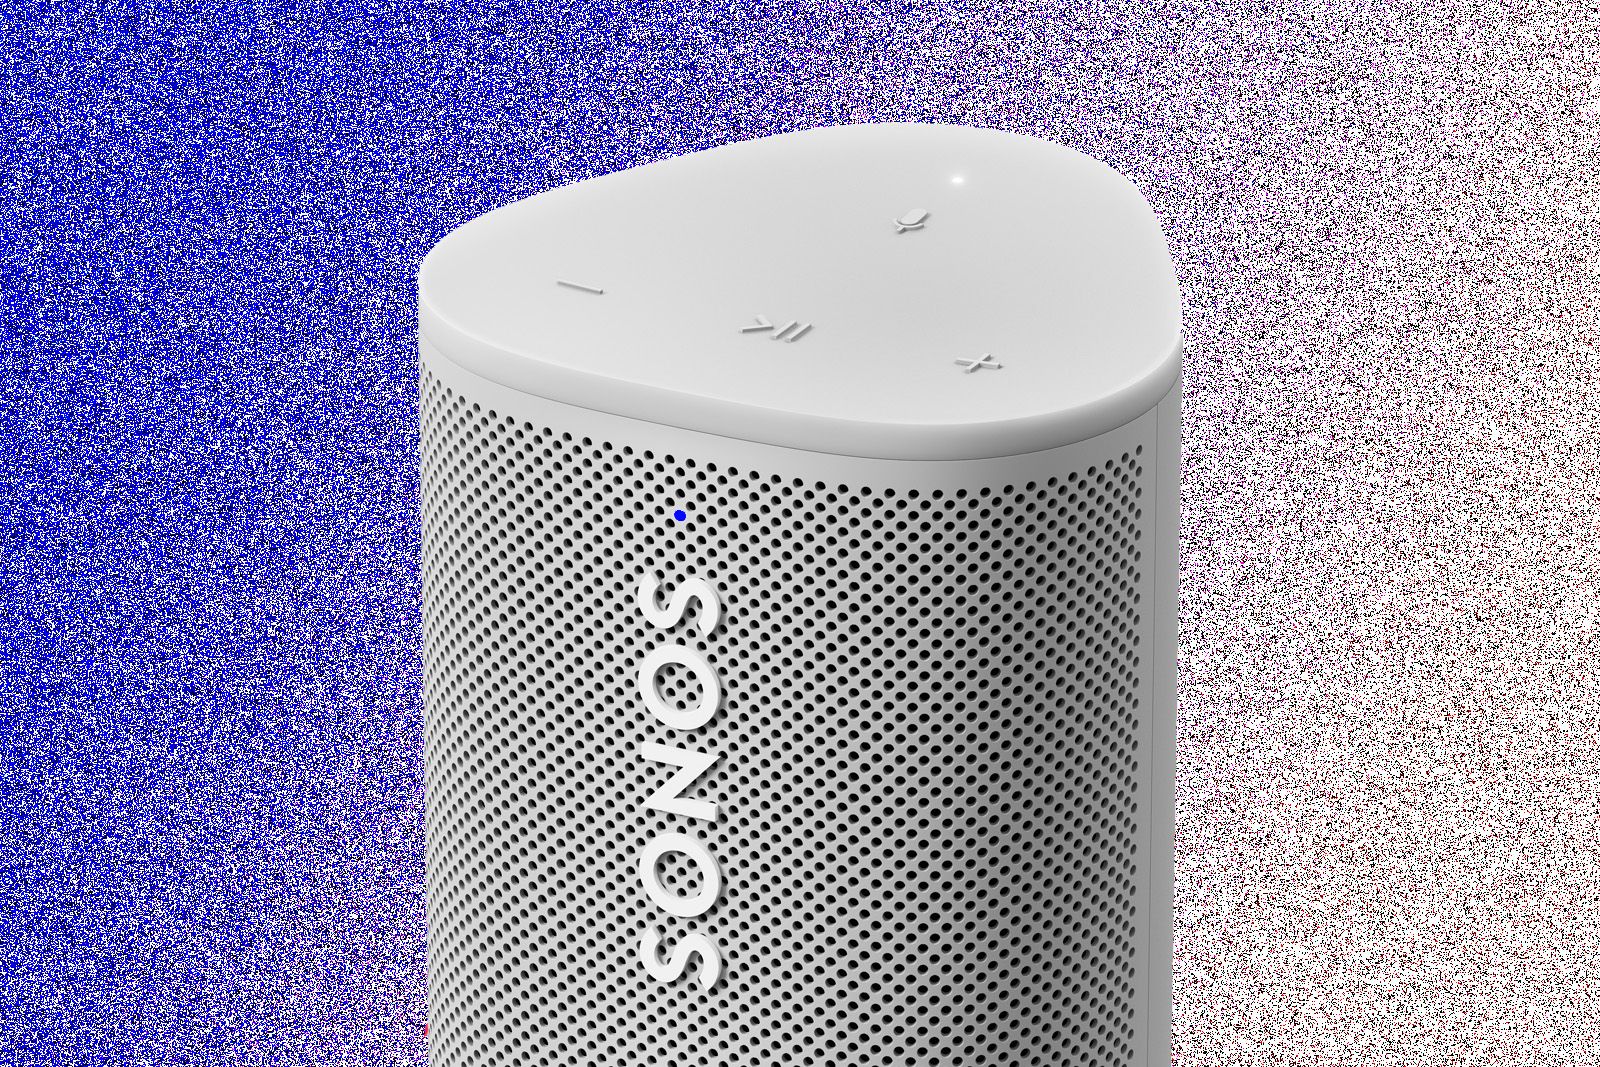 Dekorative Med vilje klamre sig How to connect your phone to Sonos Roam using Bluetooth